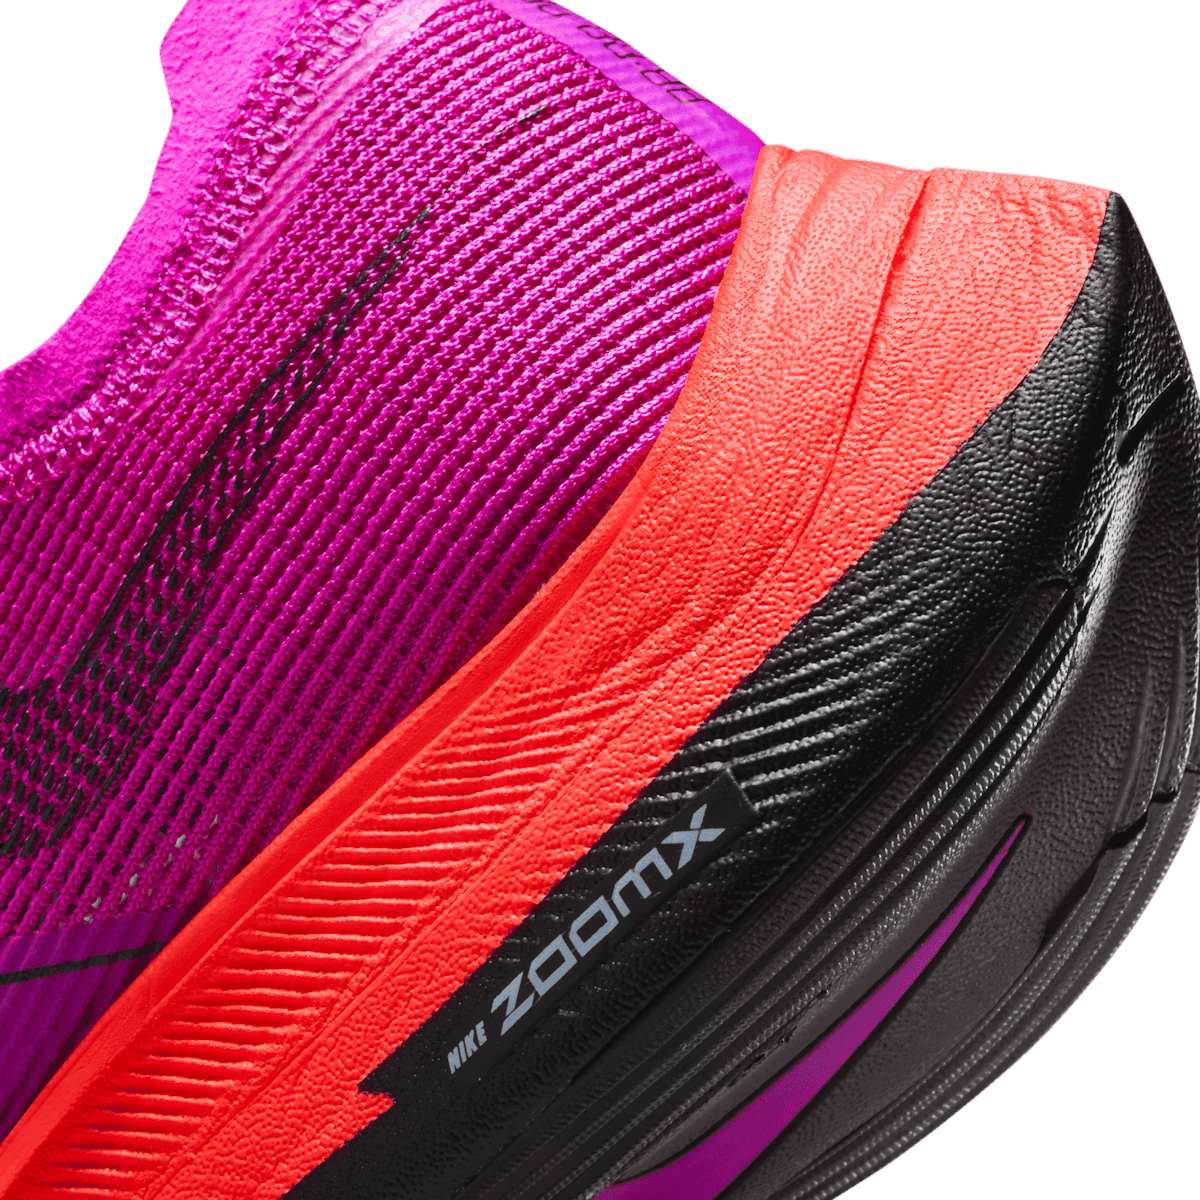 Nike ZoomX Vaporfly Next% 2 Hyper Violet Flash Crimson - CU4123